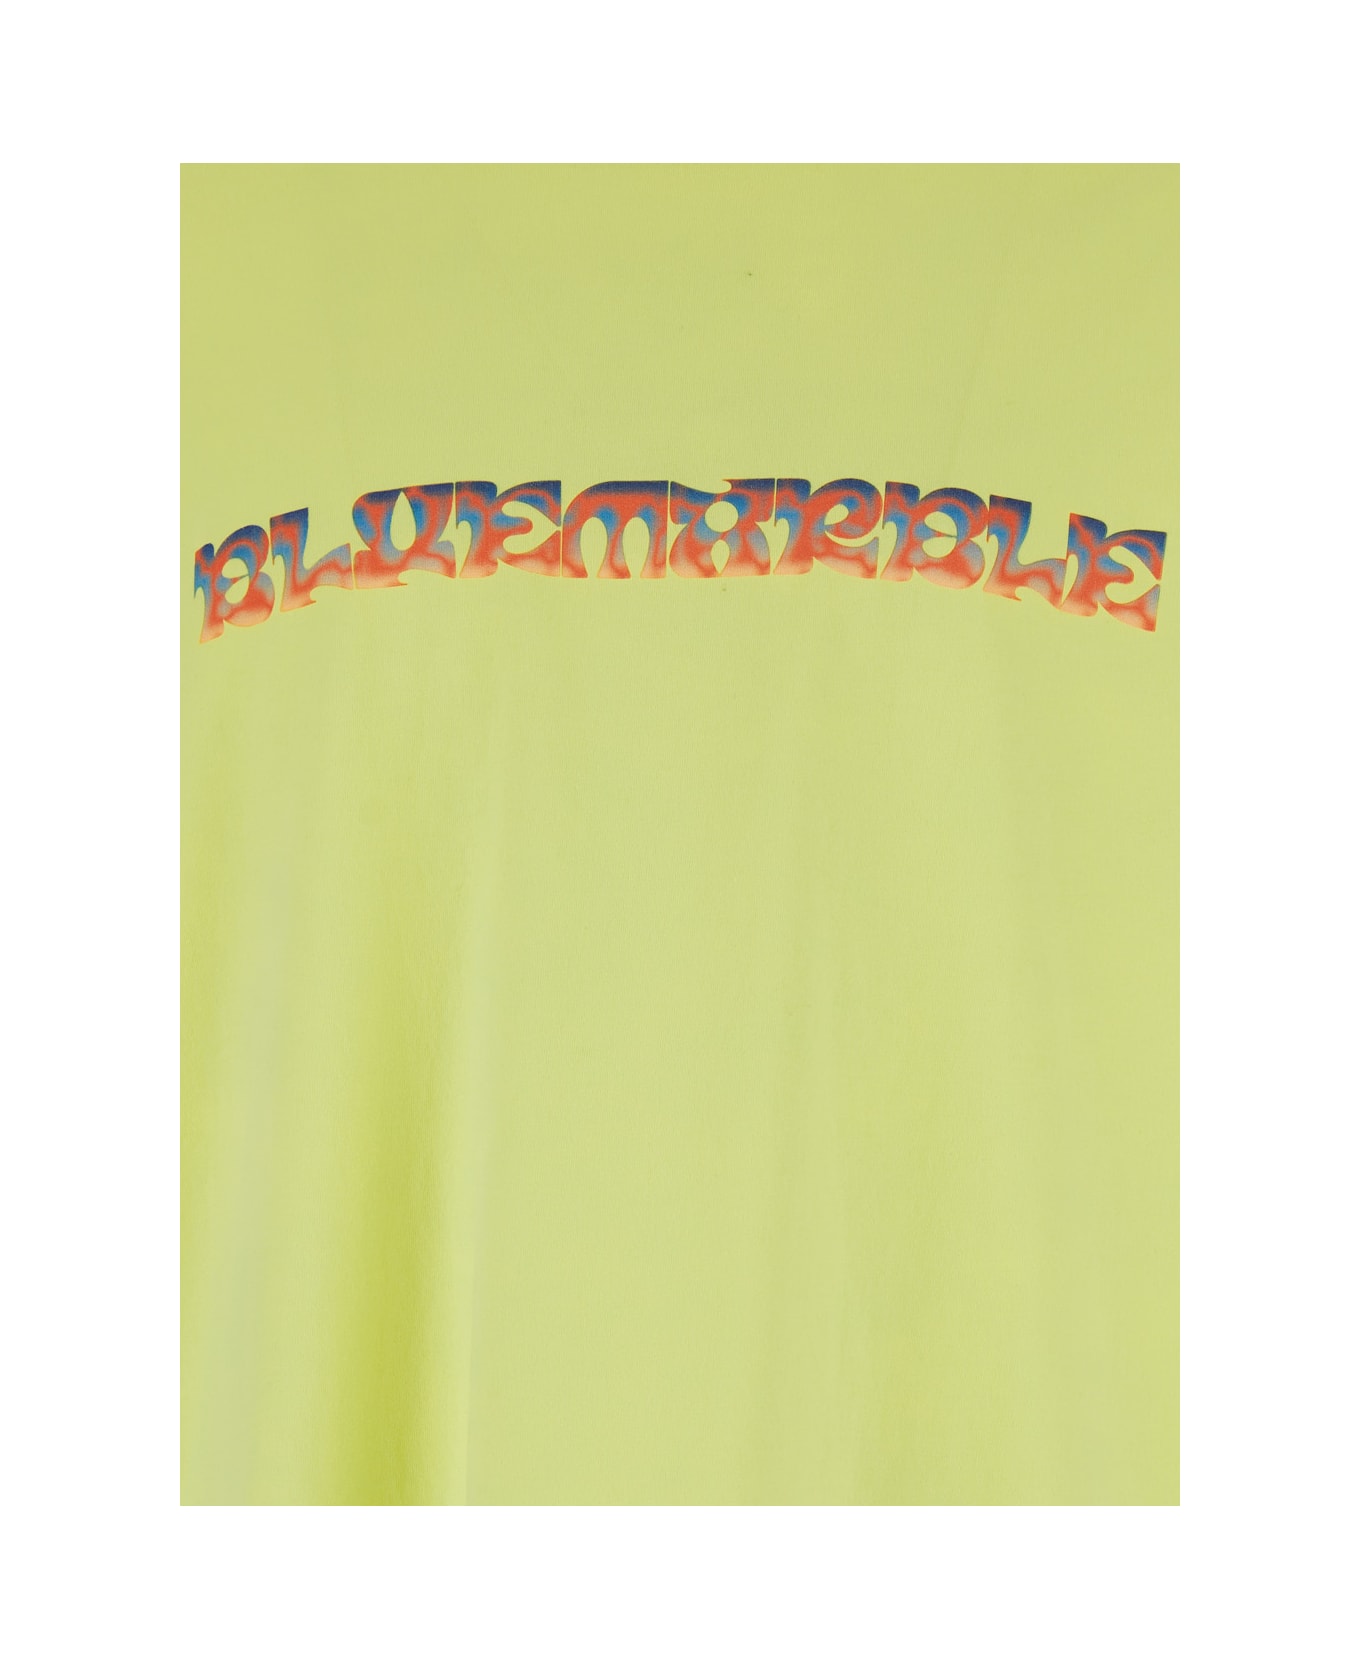 Bluemarble Trippy Leaves Print T-shirt - Yellow